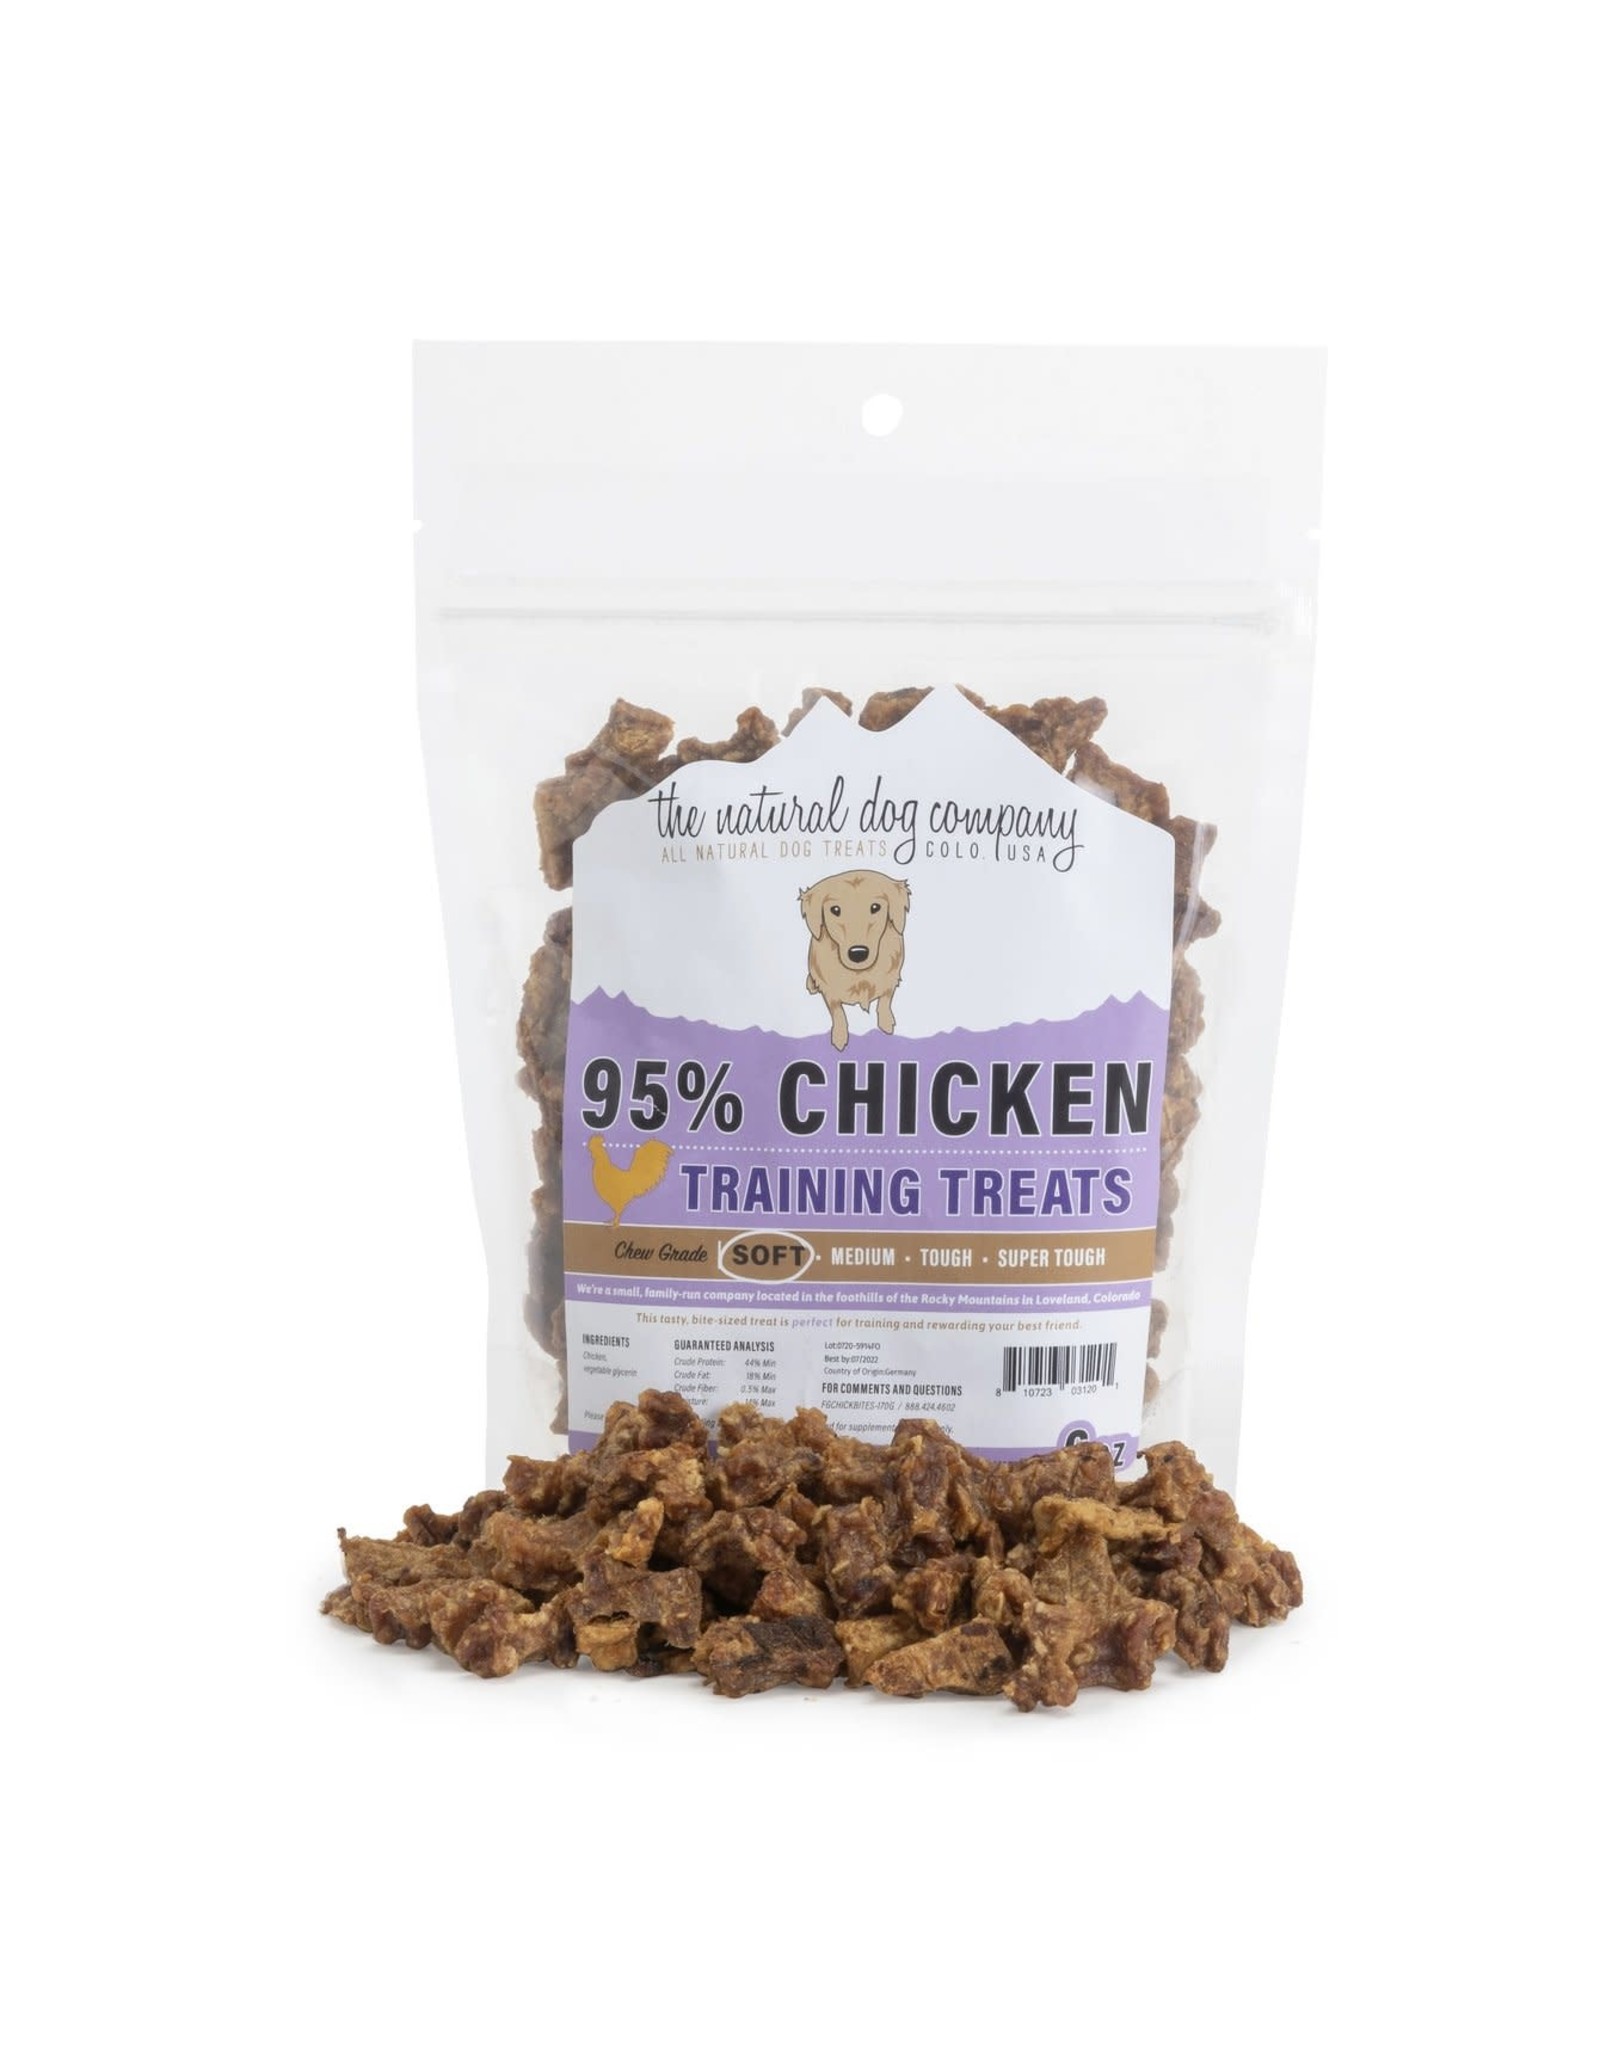 The Natural Dog Company Chicken Training Treats 95% 6oz